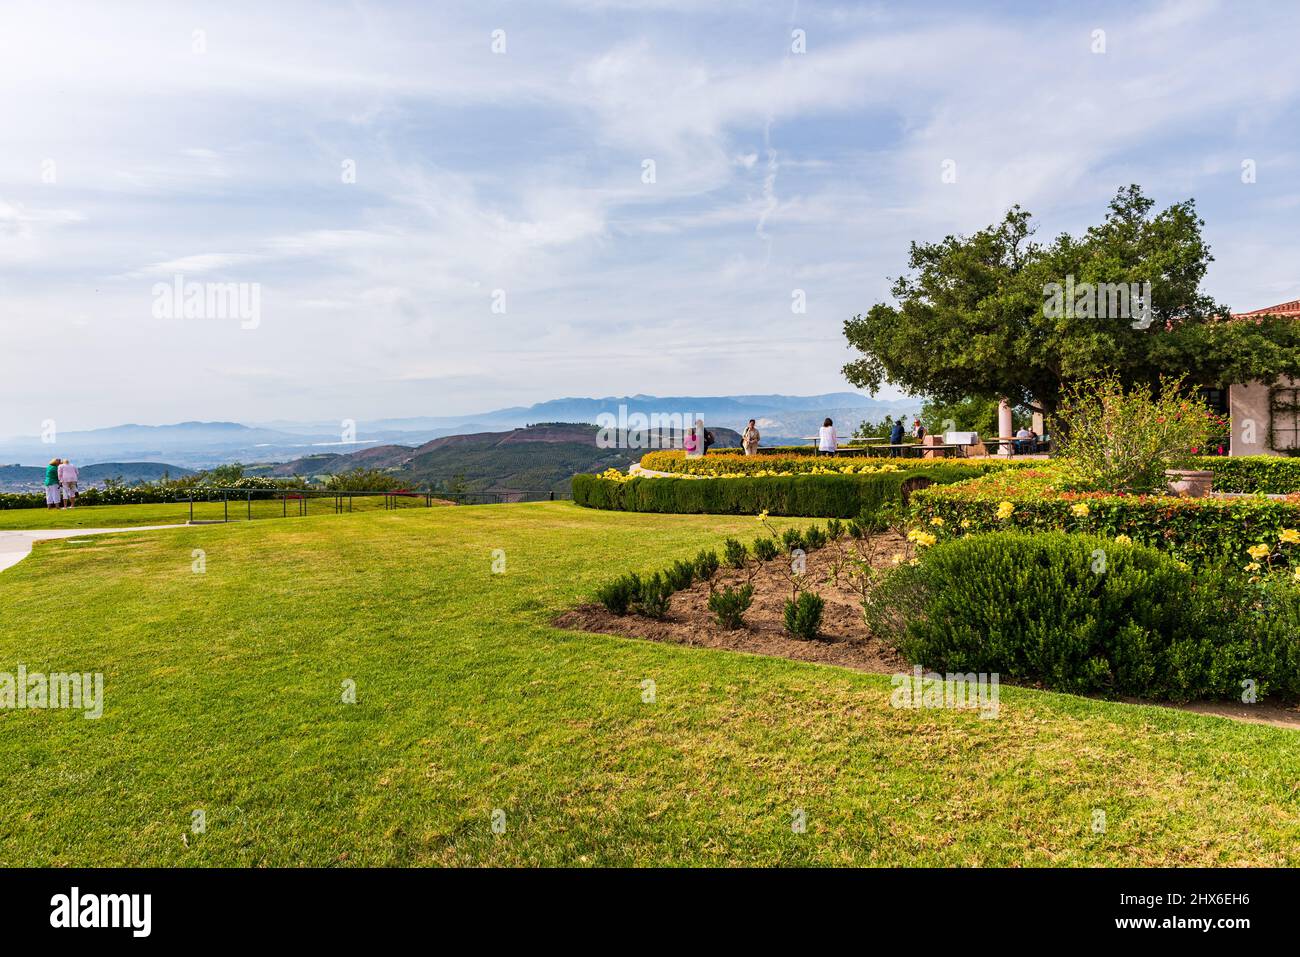 Simi Valley, CA /USA - April 6, 2016: Spring garden path at the Ronald Reagan Library in Simi Valley, California. Stock Photo